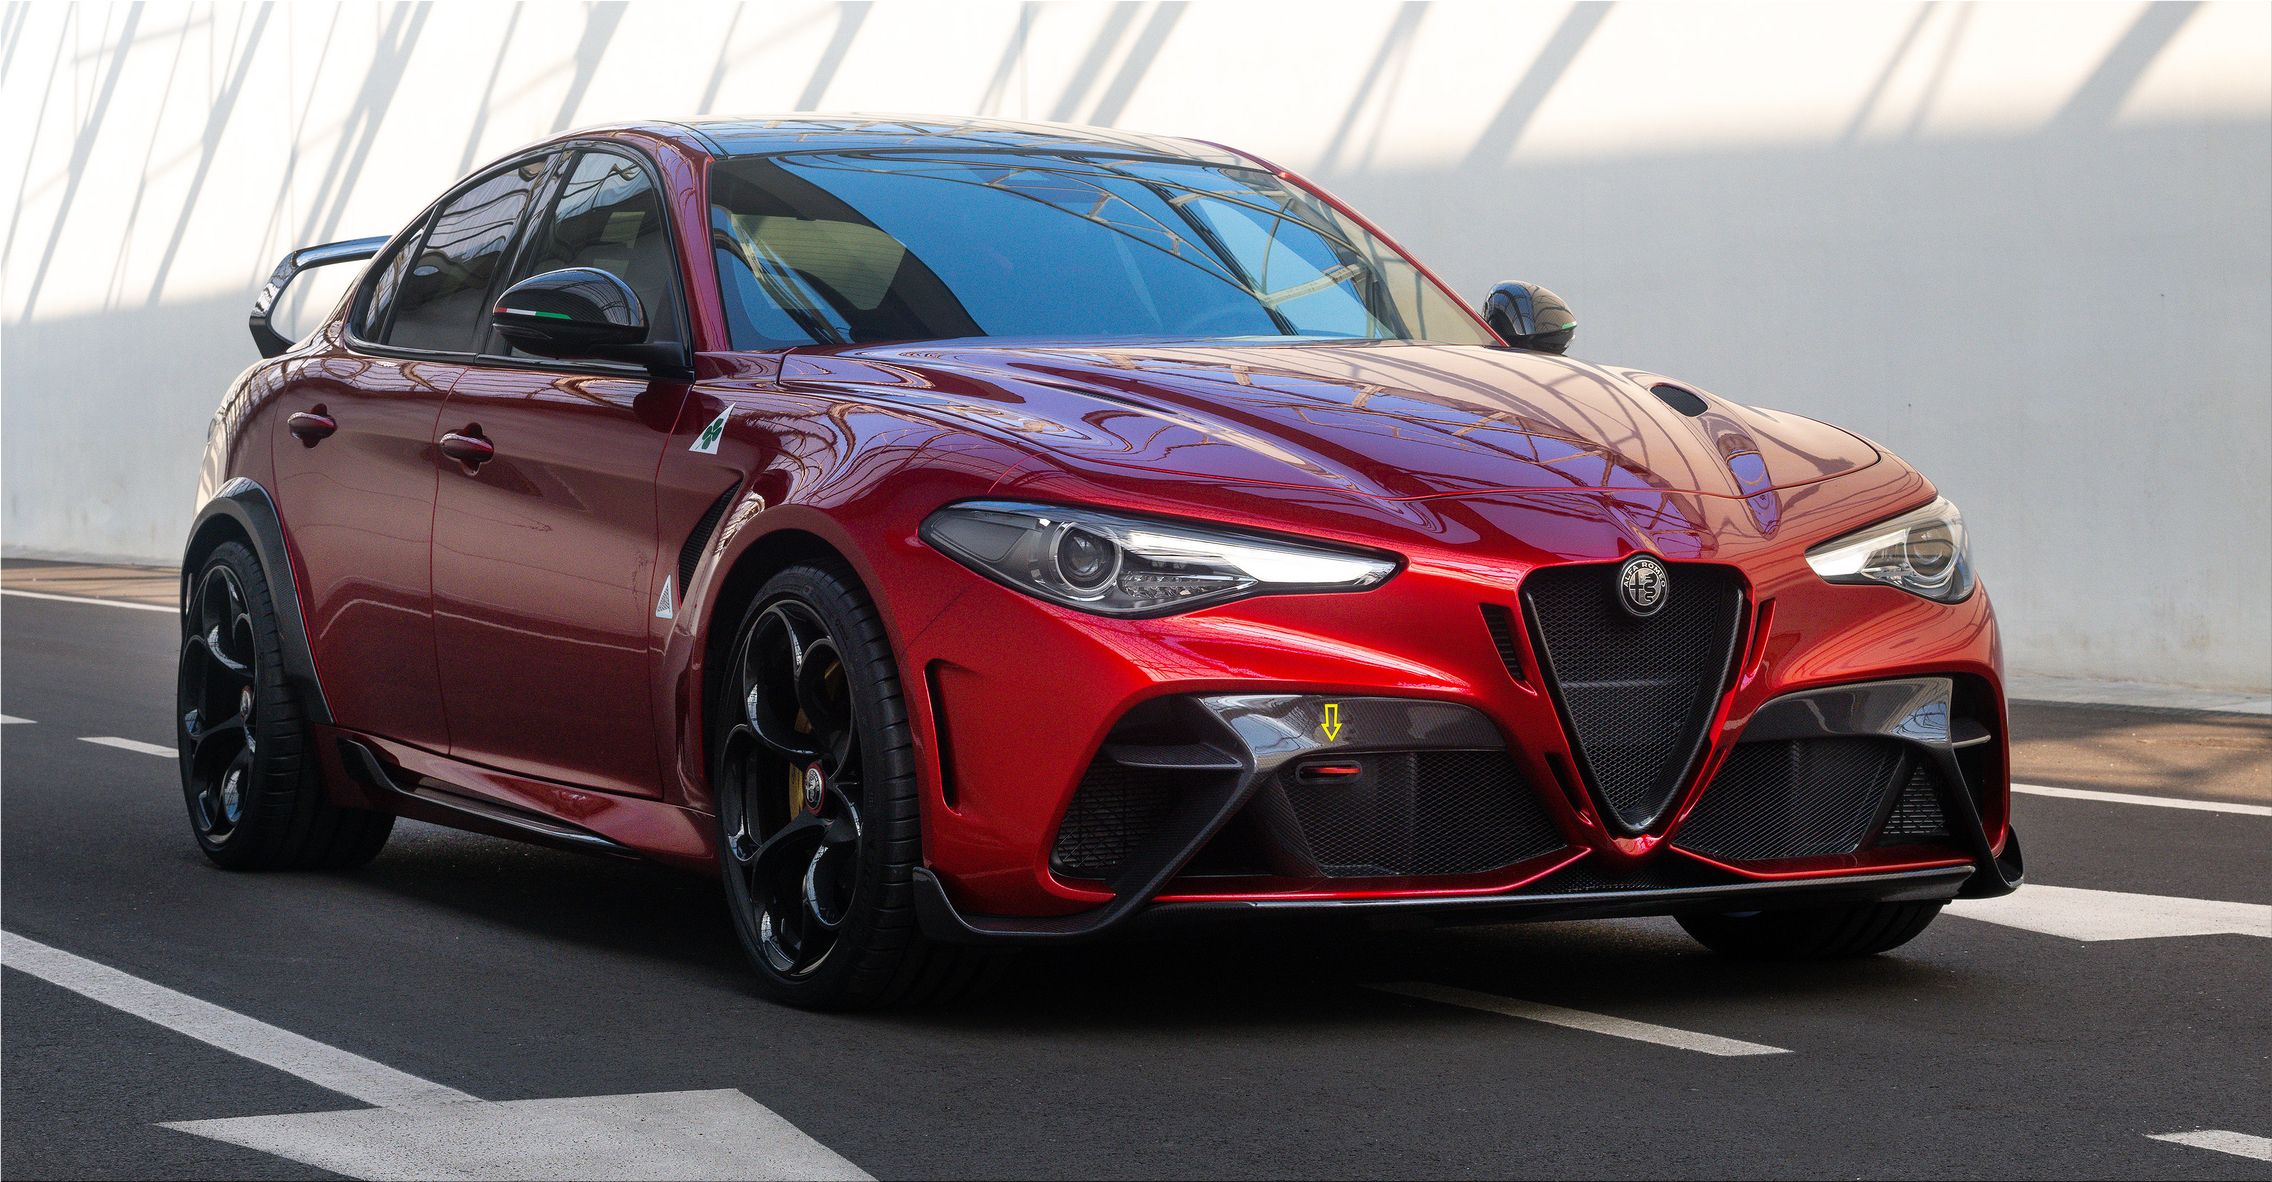 Alfa Romeo Giulia GTA and GTAm - prices revealed